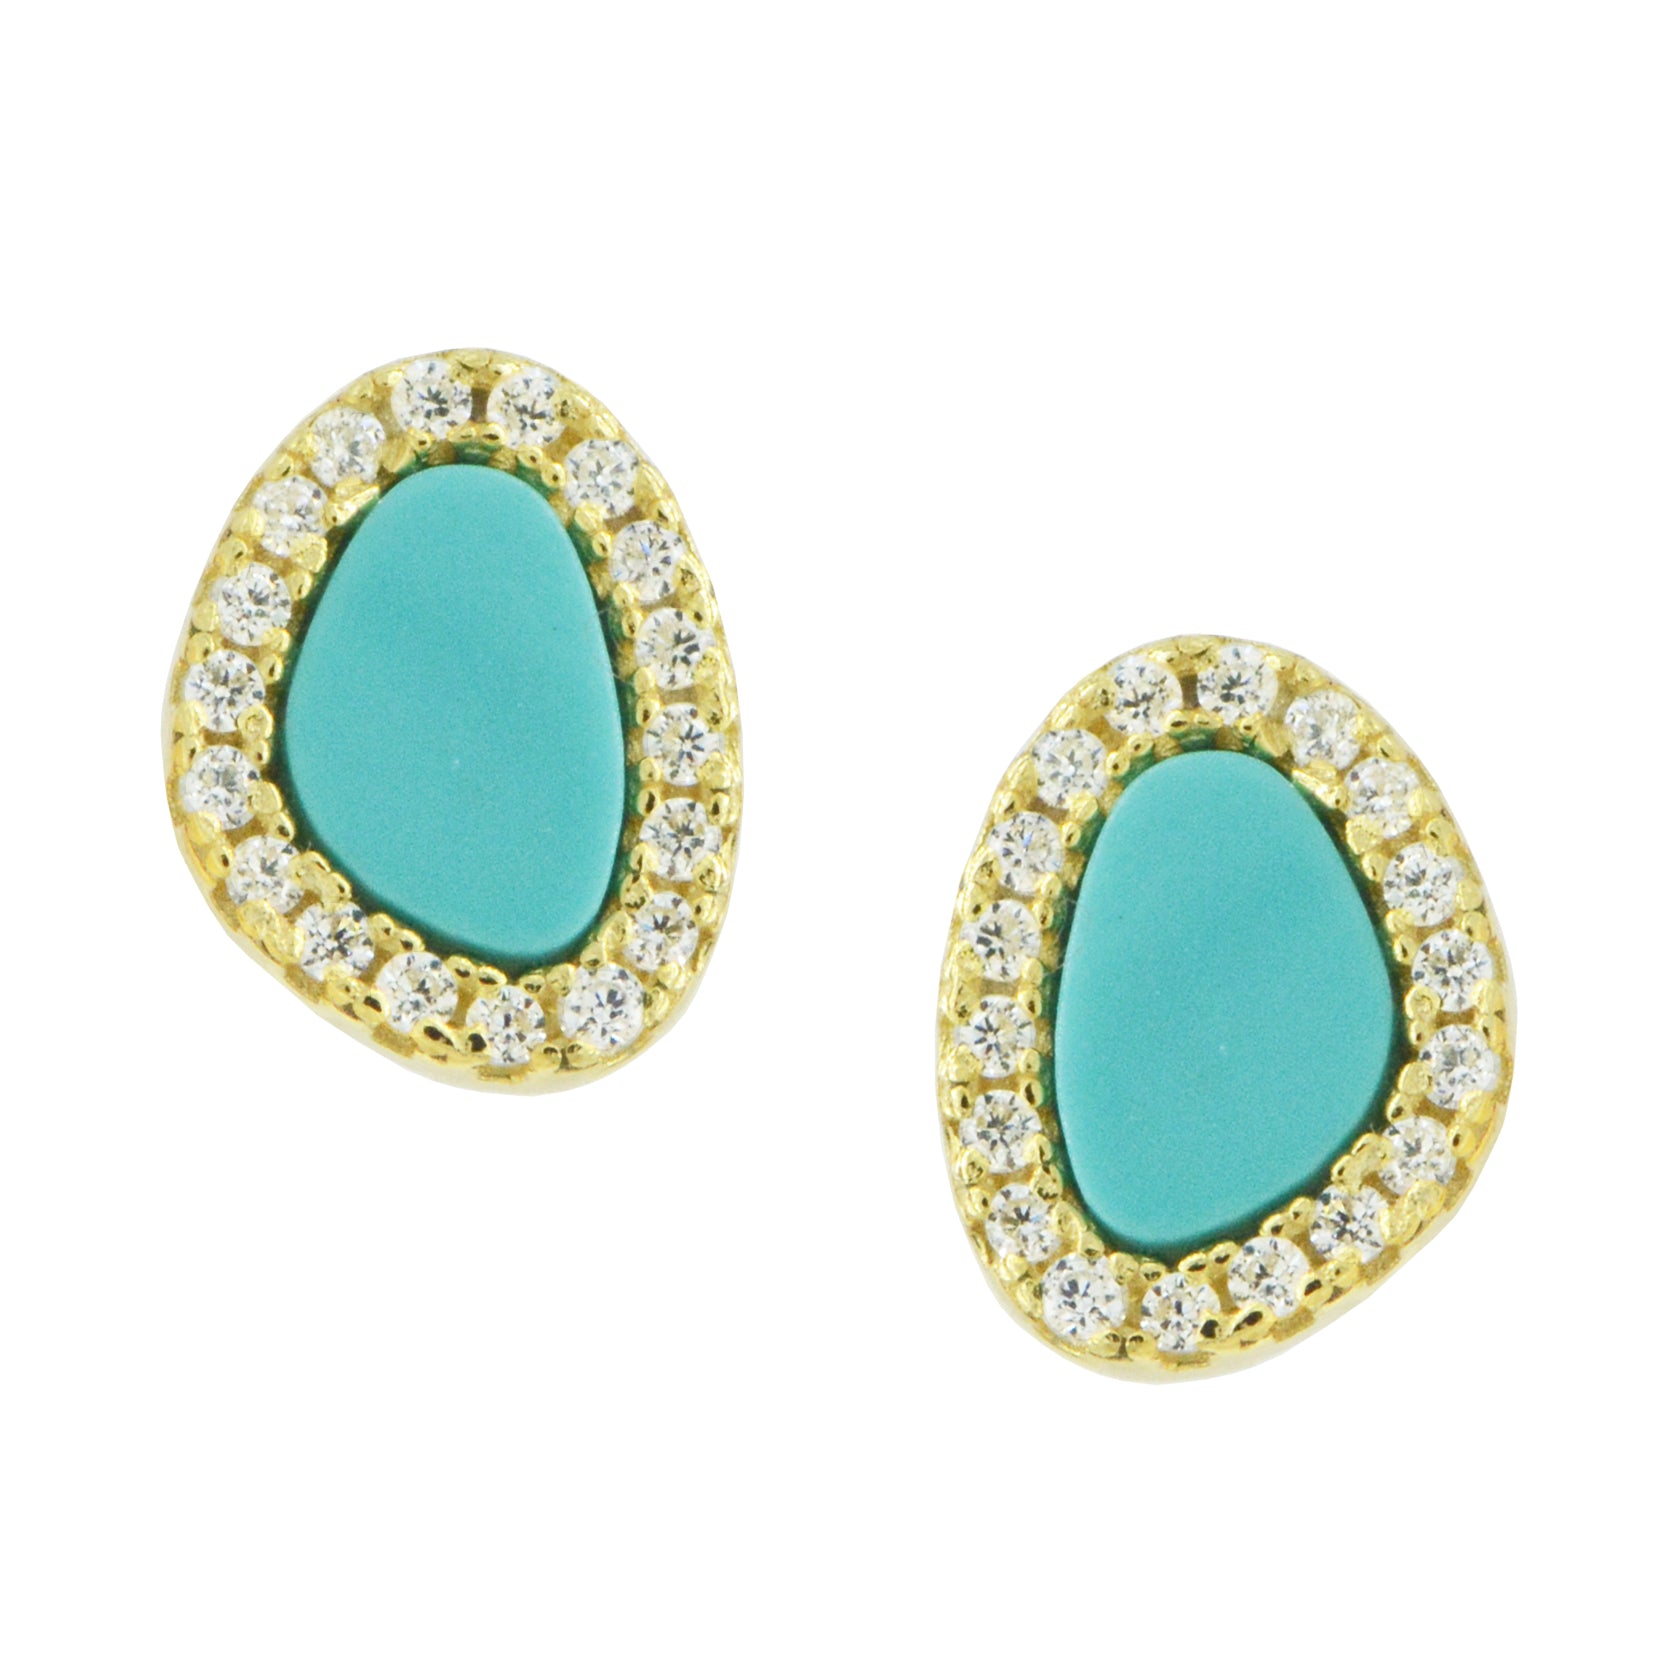 Turquoise Pebble Stud Earrings